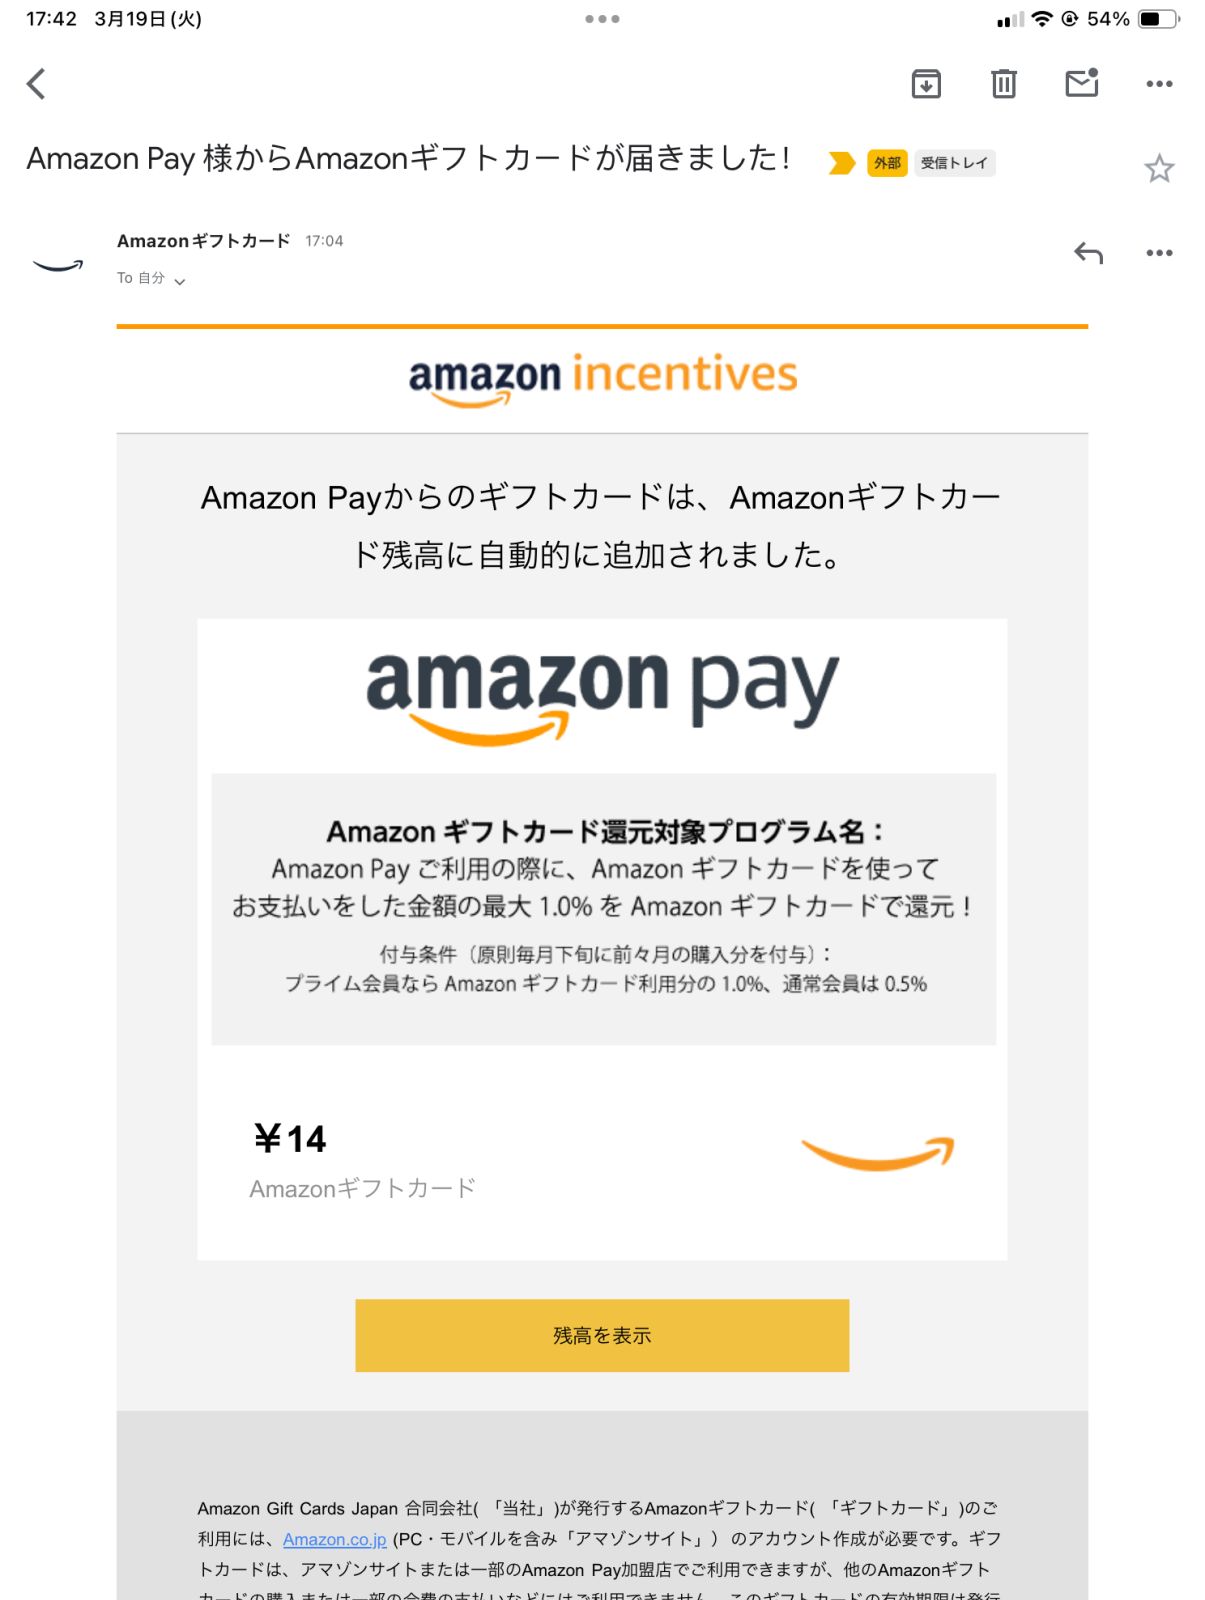 Amazon incentives